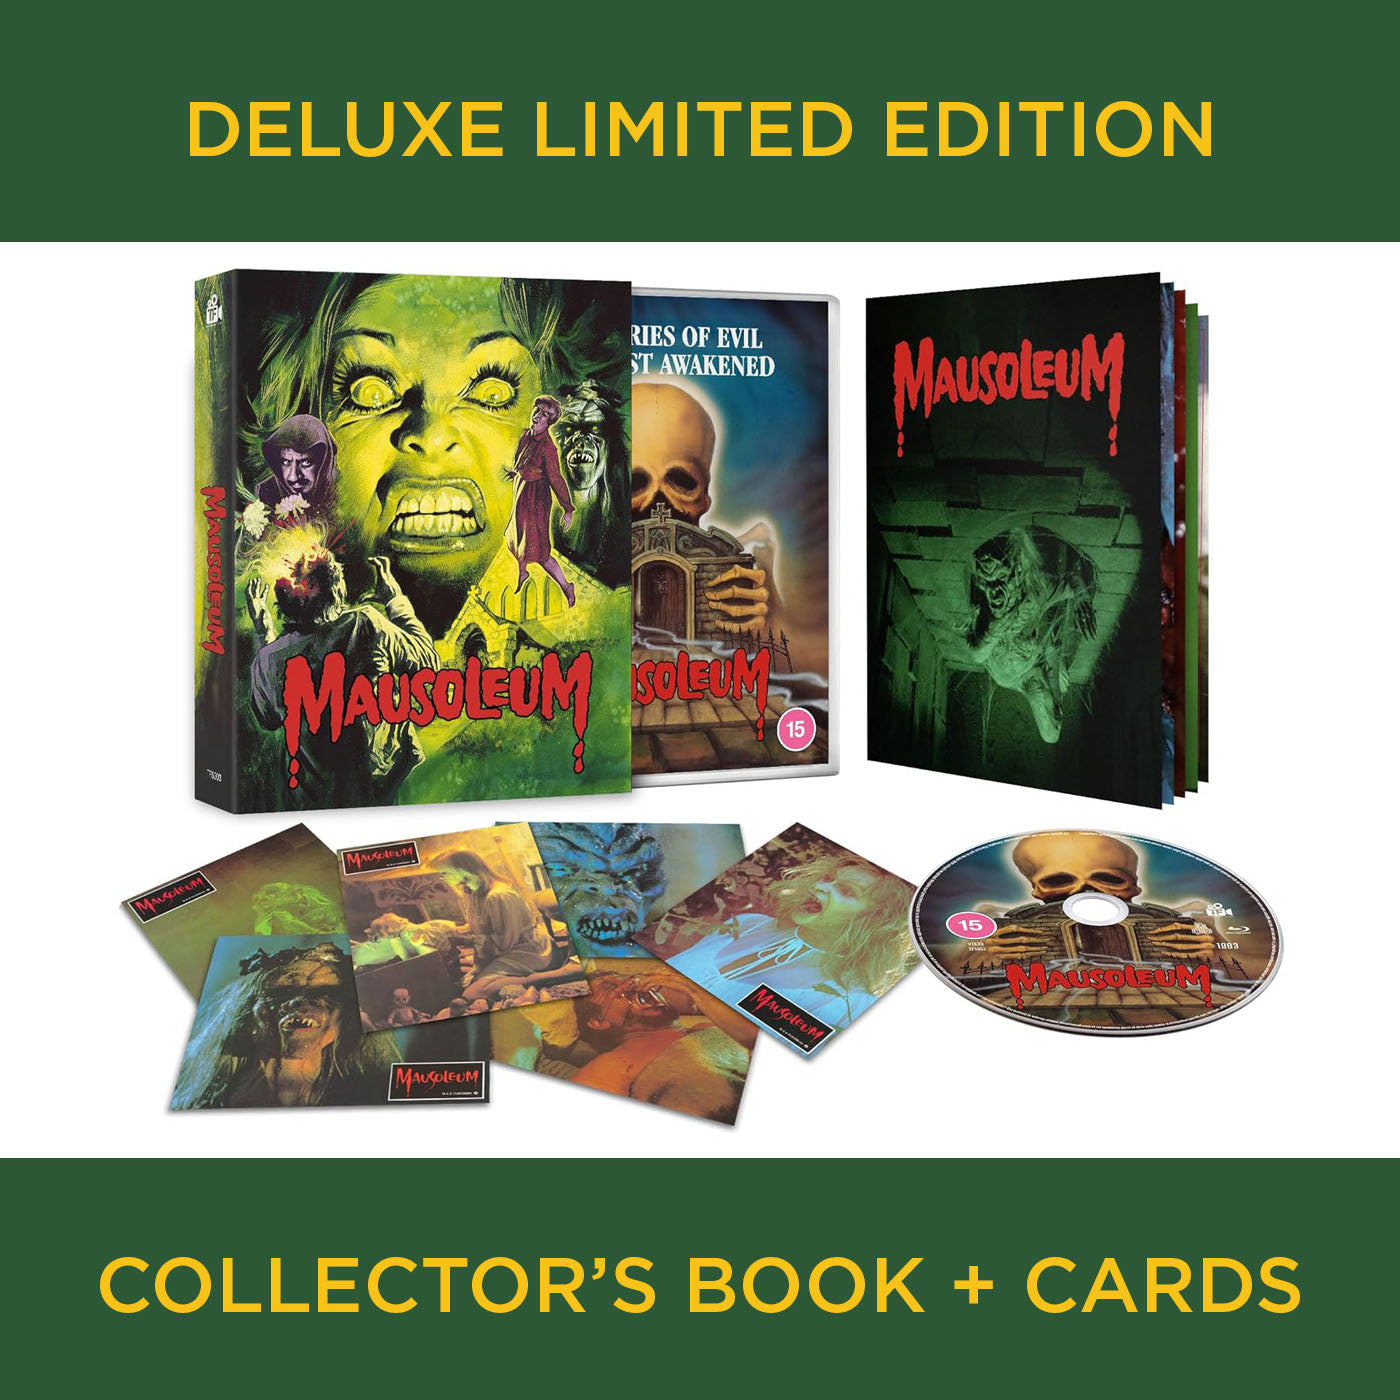 Mausoleum 1983 Horror Limited Edition Region ABC Blu-ray Treasured Films UK